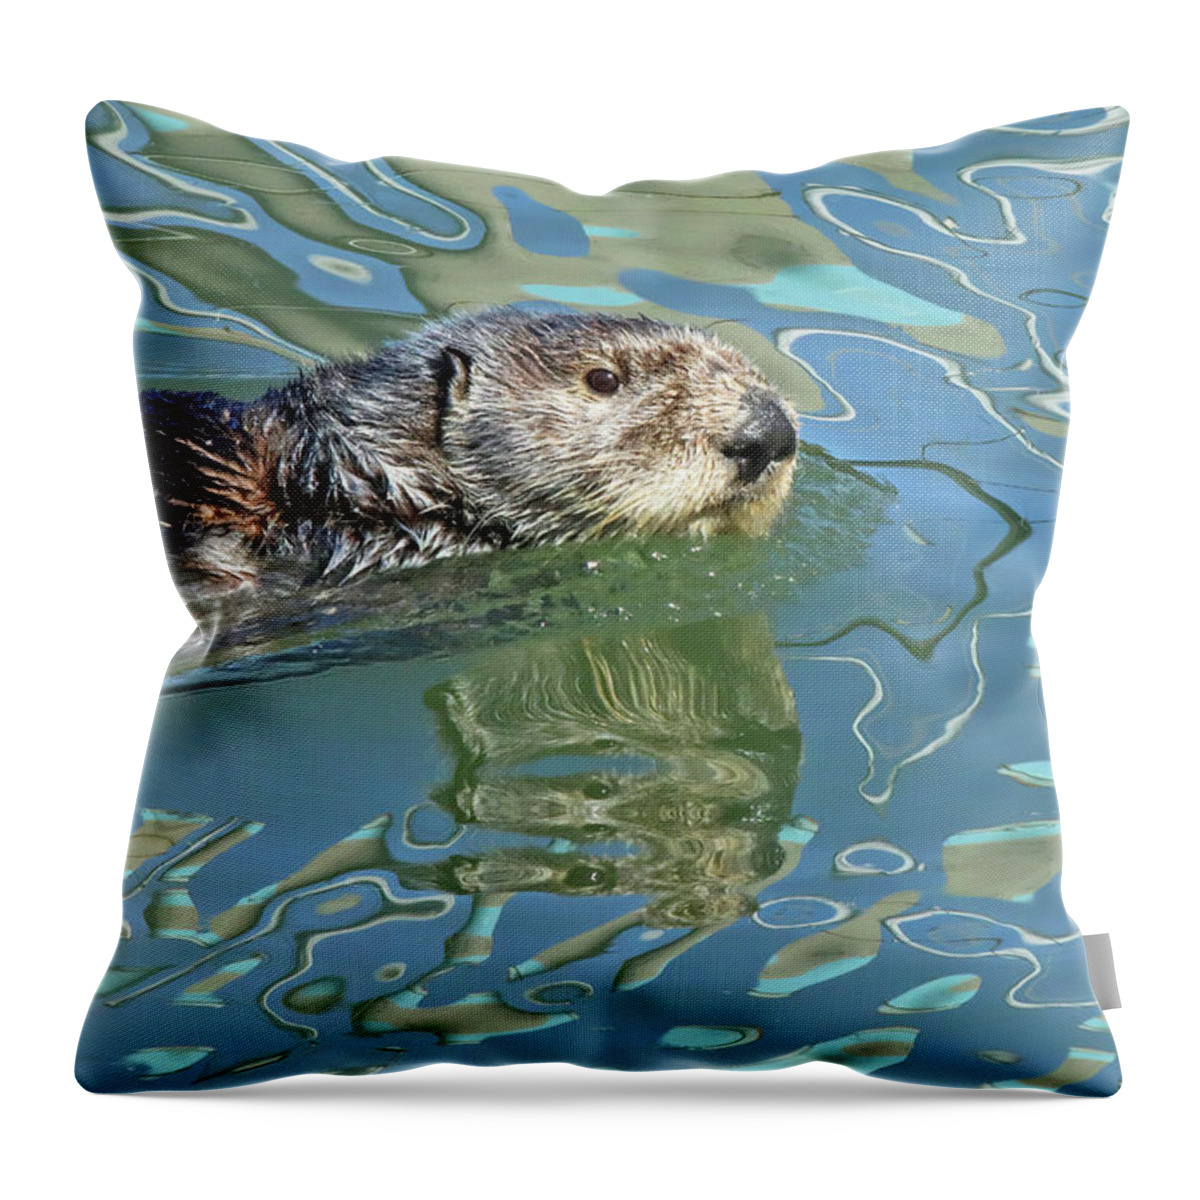  Throw Pillow featuring the photograph Sea Otter #1 by Carla Brennan